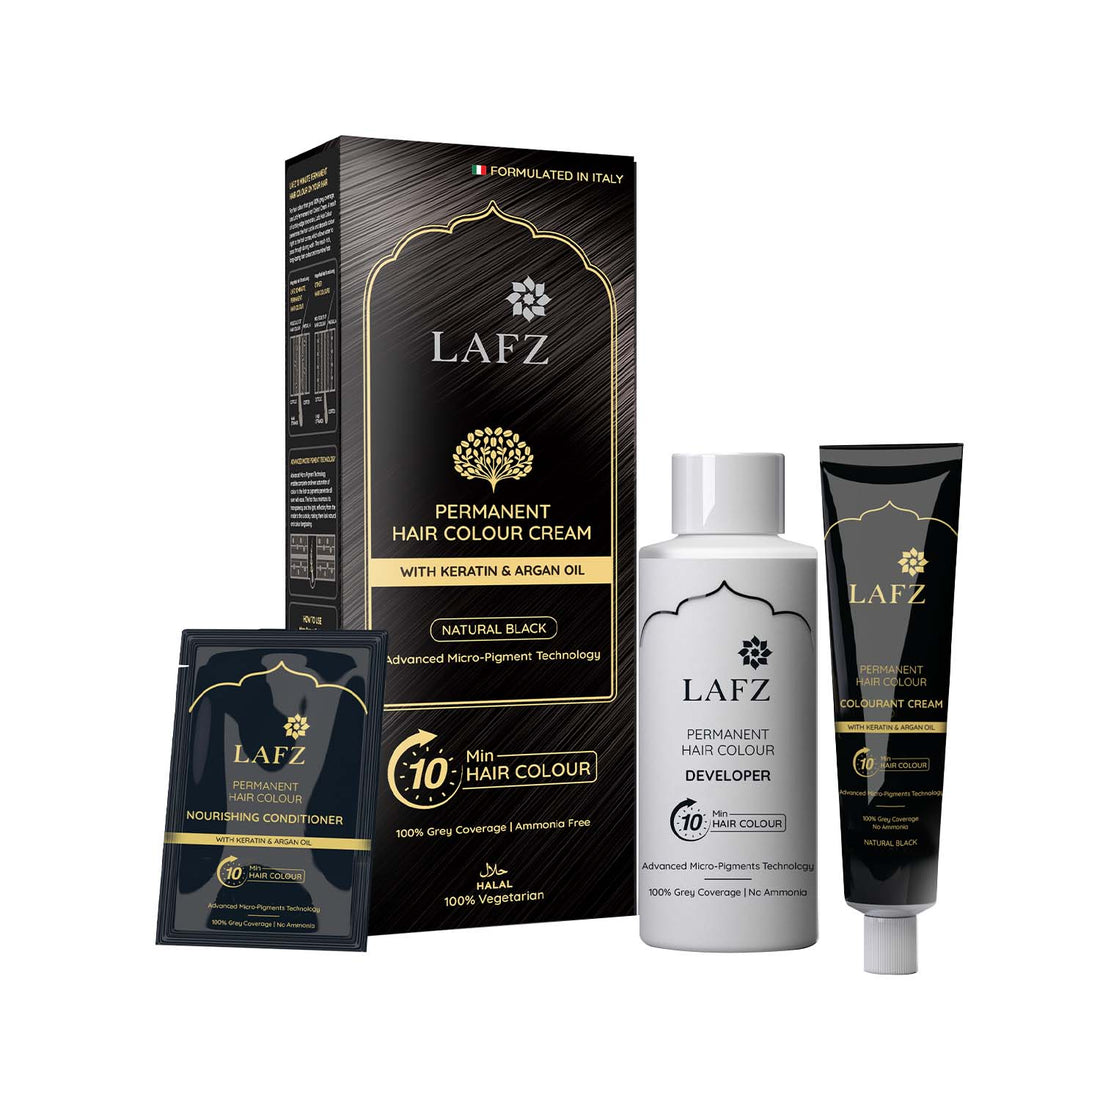 Lafz Permanent 10 Min Hair Color Cream Dubai 40ml - Natural Black (Pack of 02)